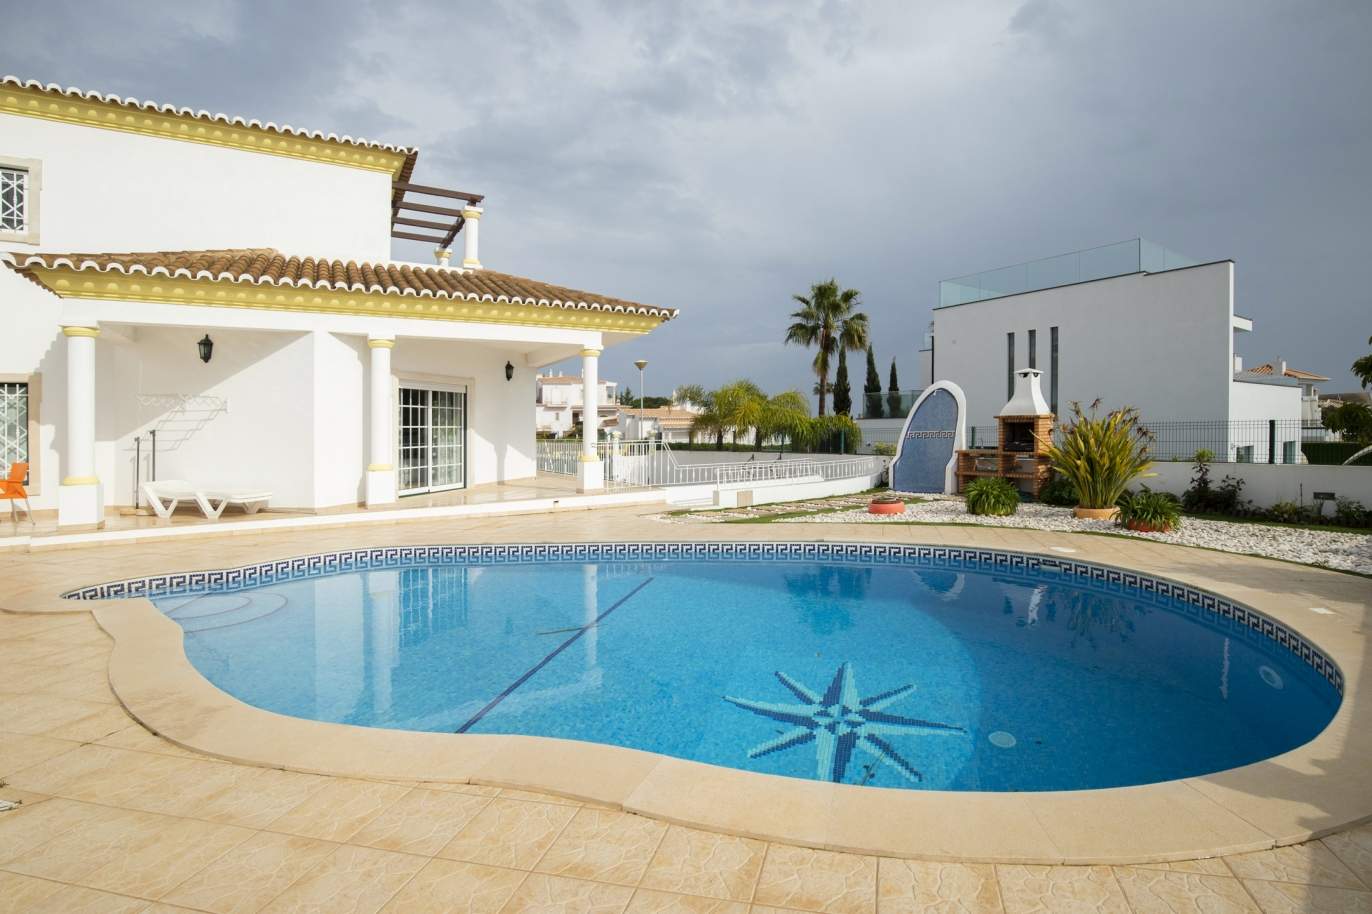 4 Bedroom Villa with swimming pool, for sale, in Albufeira, Algarve_196127